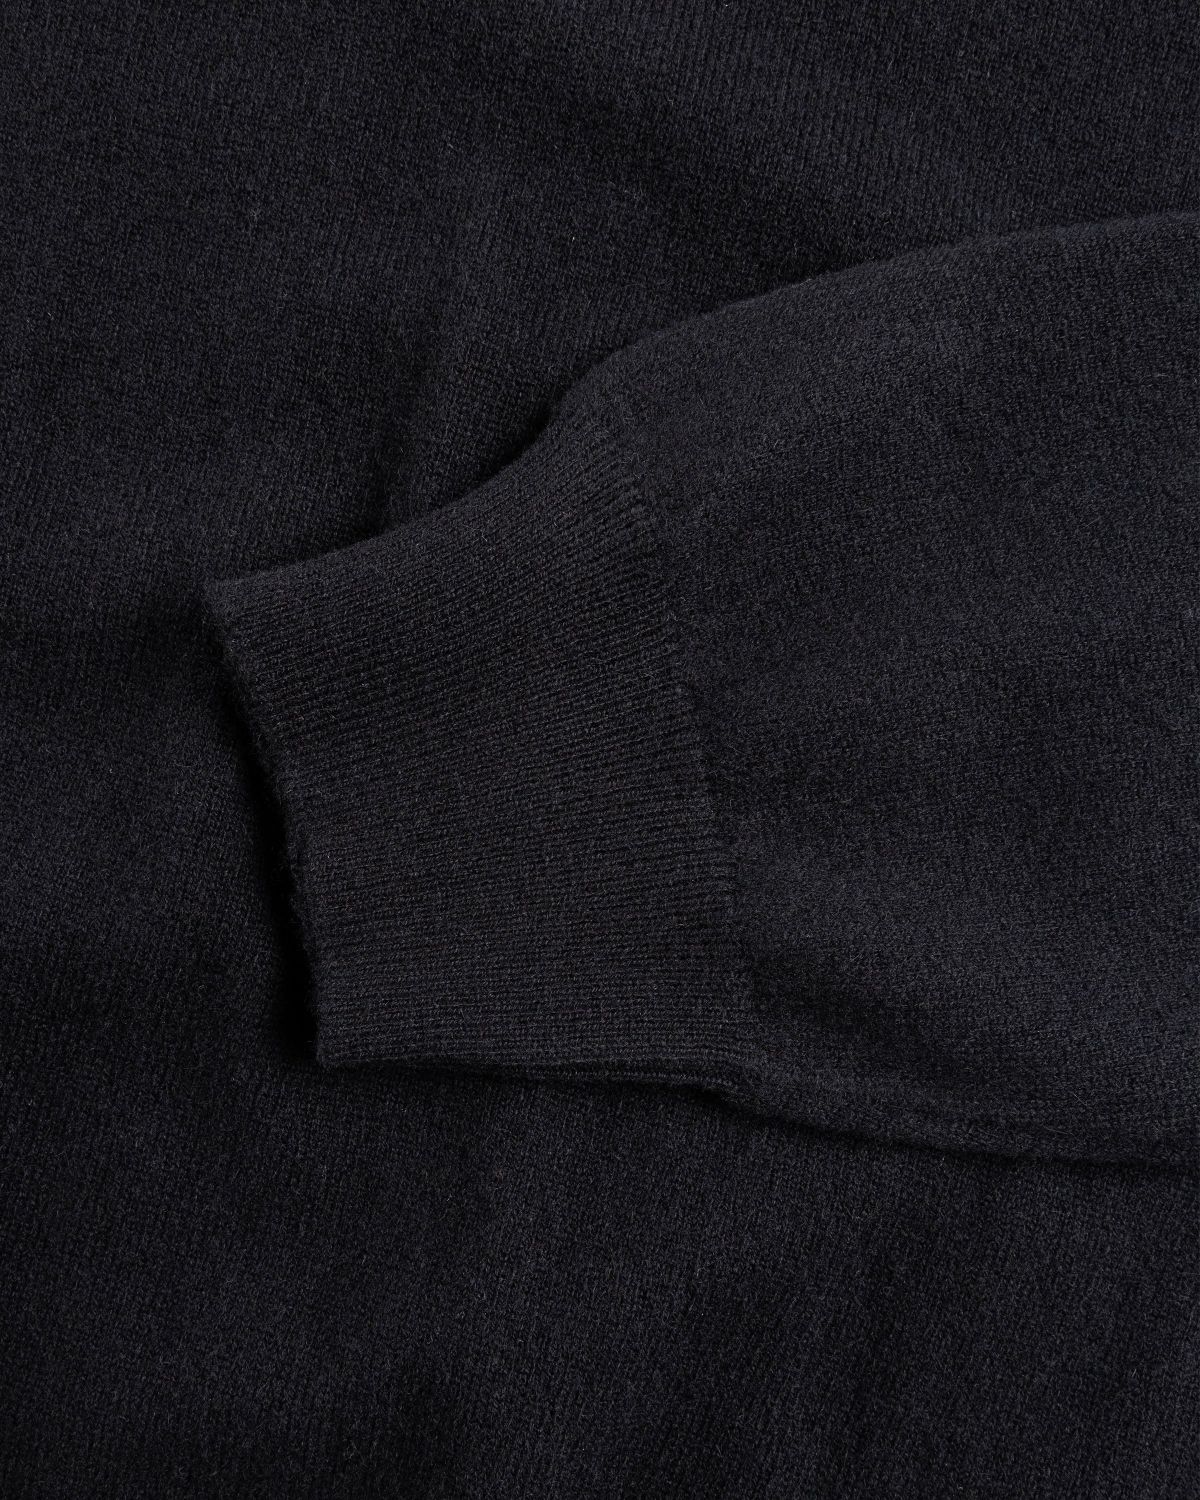 Highsnobiety HS05 – Cashmere Crew Sweater Black - Knitwear - Black - Image 7